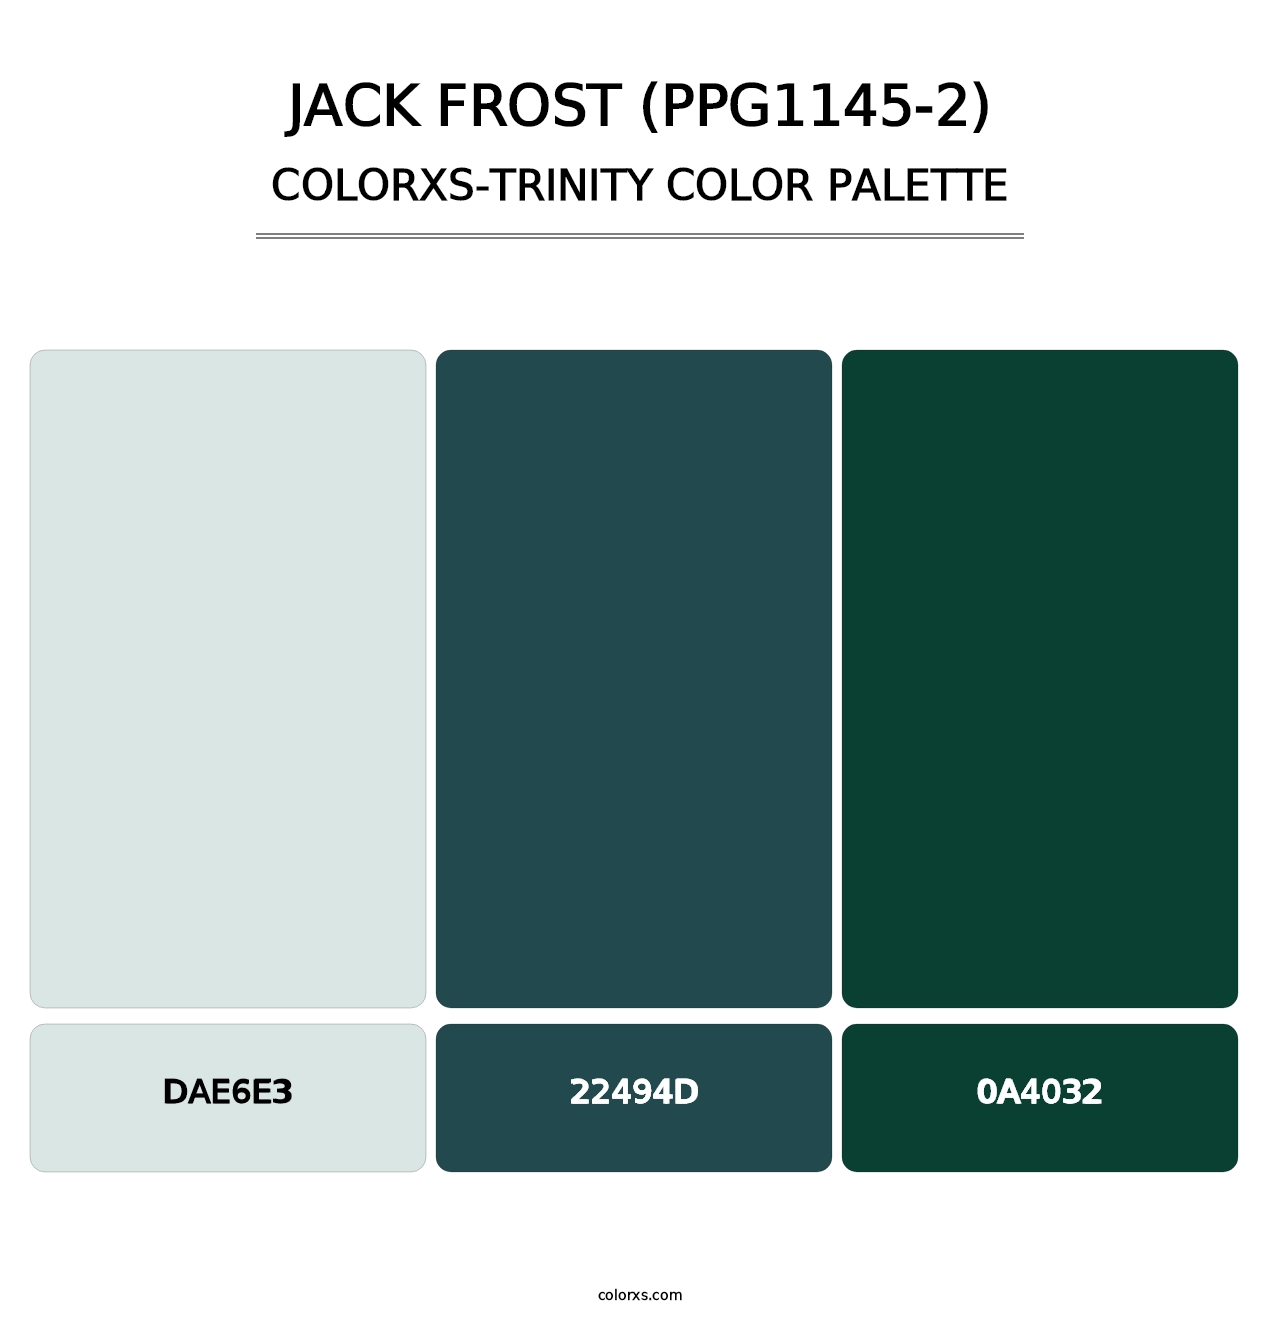 Jack Frost (PPG1145-2) - Colorxs Trinity Palette